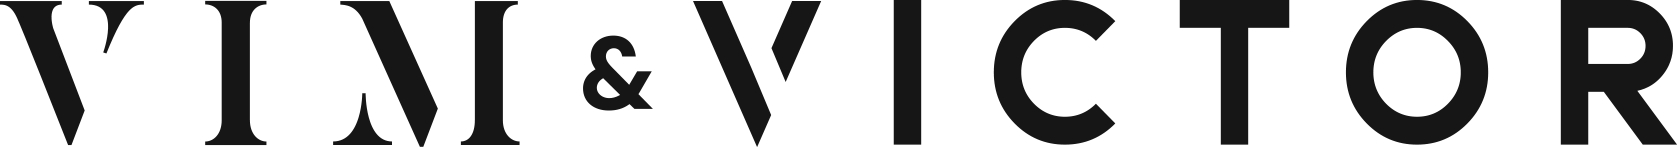 Vim-Victor_Primary_Logo.png